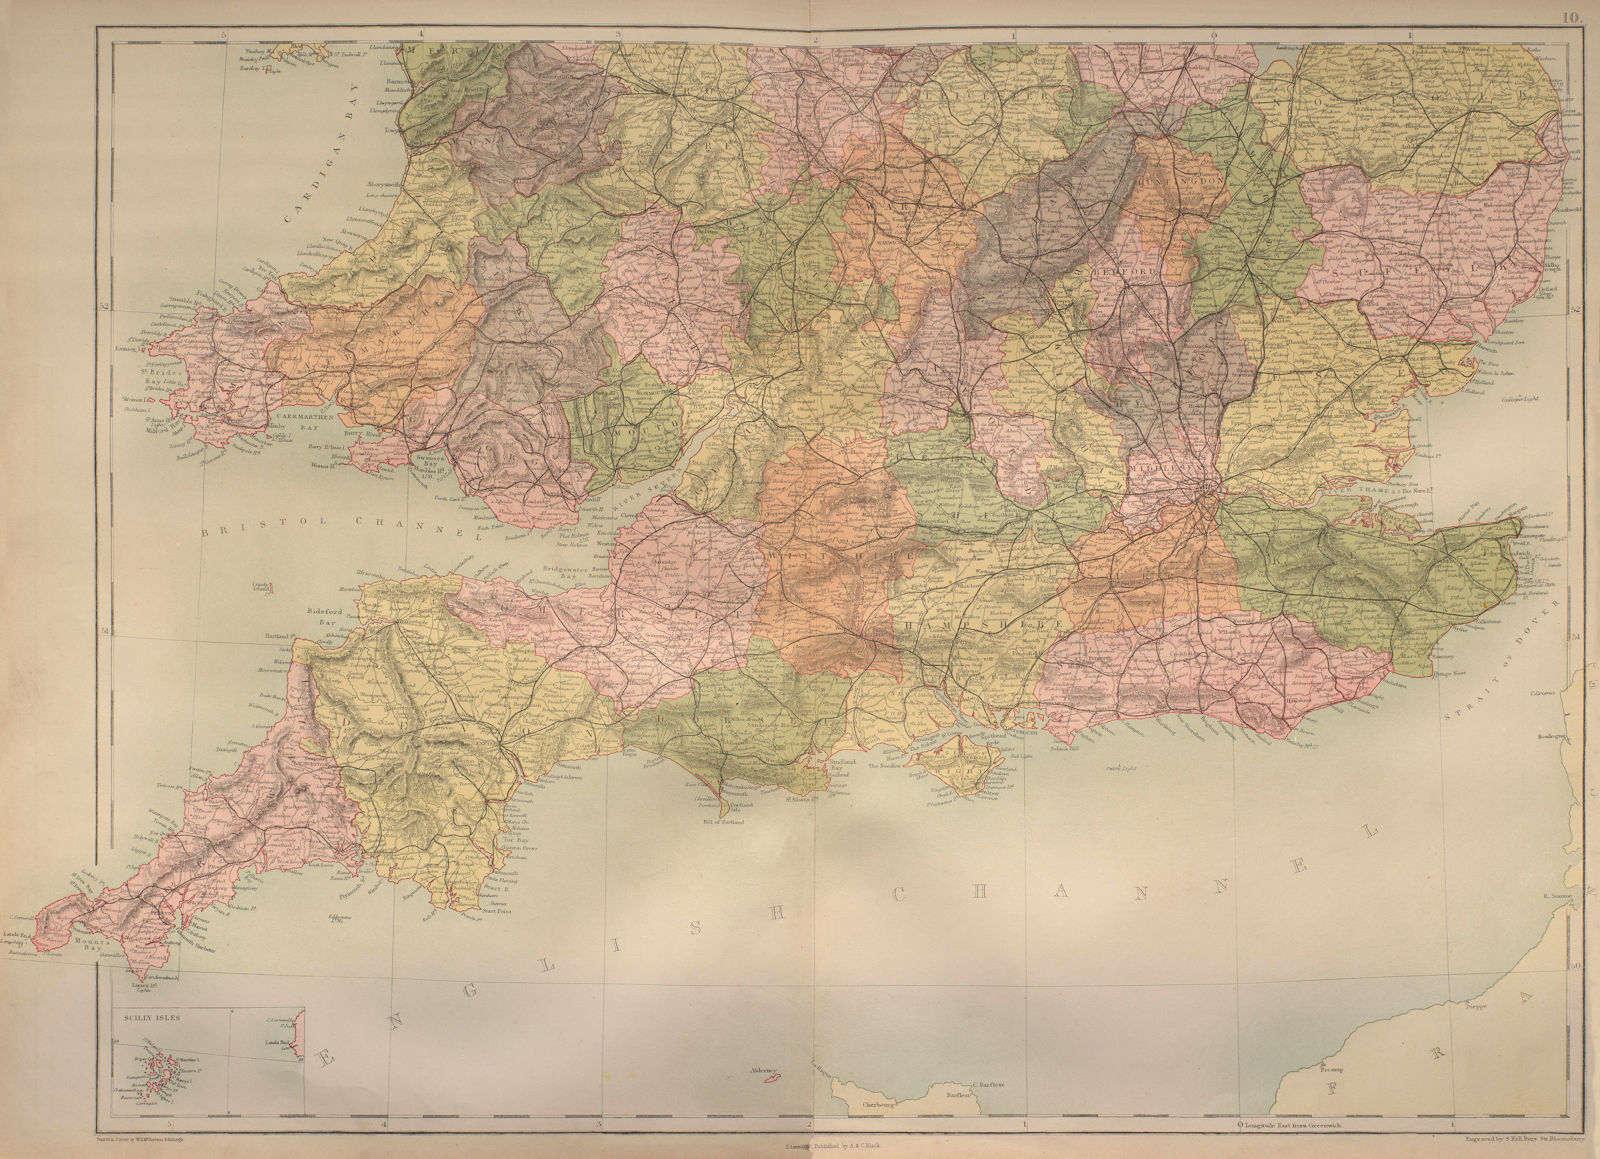 England & Wales South Sheet. Counties & railways. BARTHOLOMEW 1870 old map